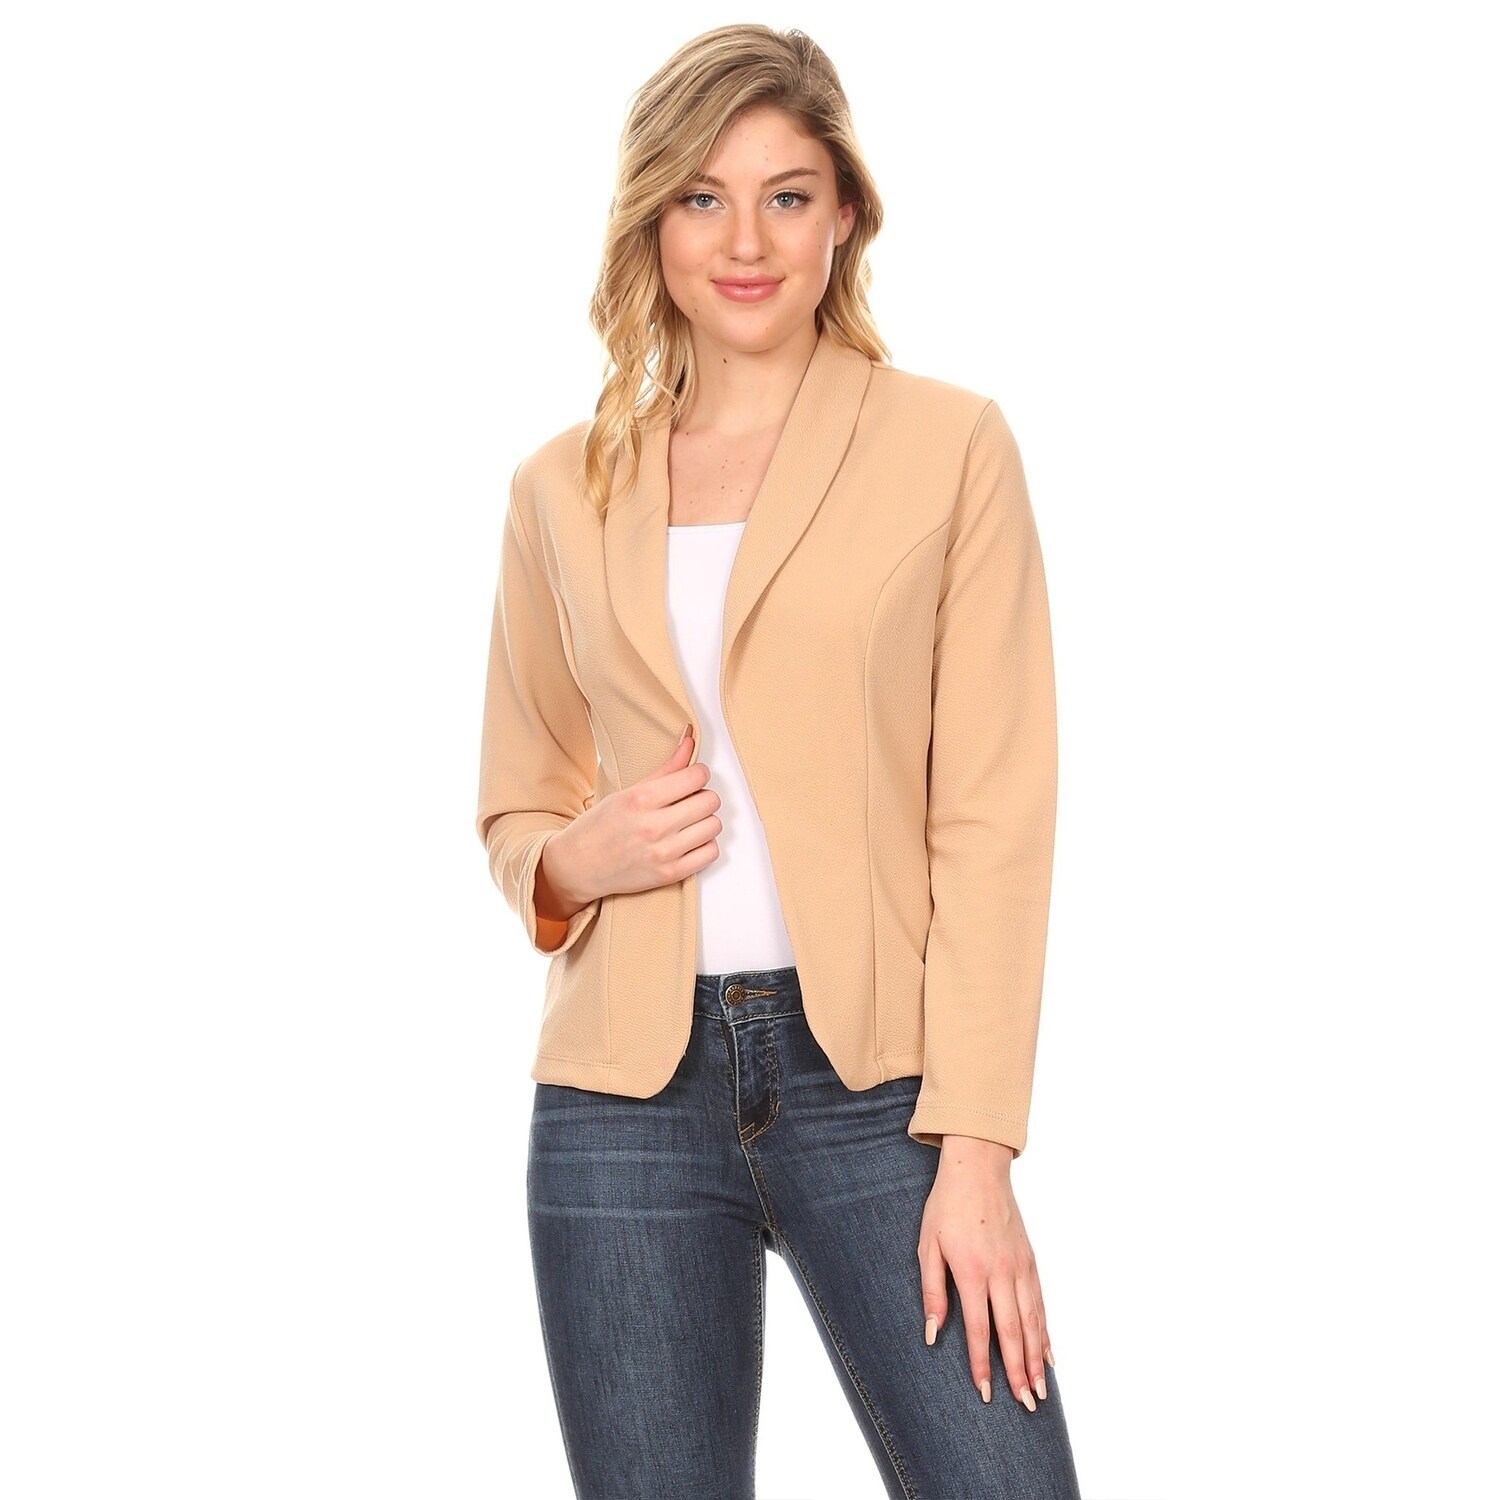 Kanzd Blazers for Women Casual Fashion Tie Dye Stripe Print Open Front Long Sleeve Work Office Jackets Blazer Cardigan 